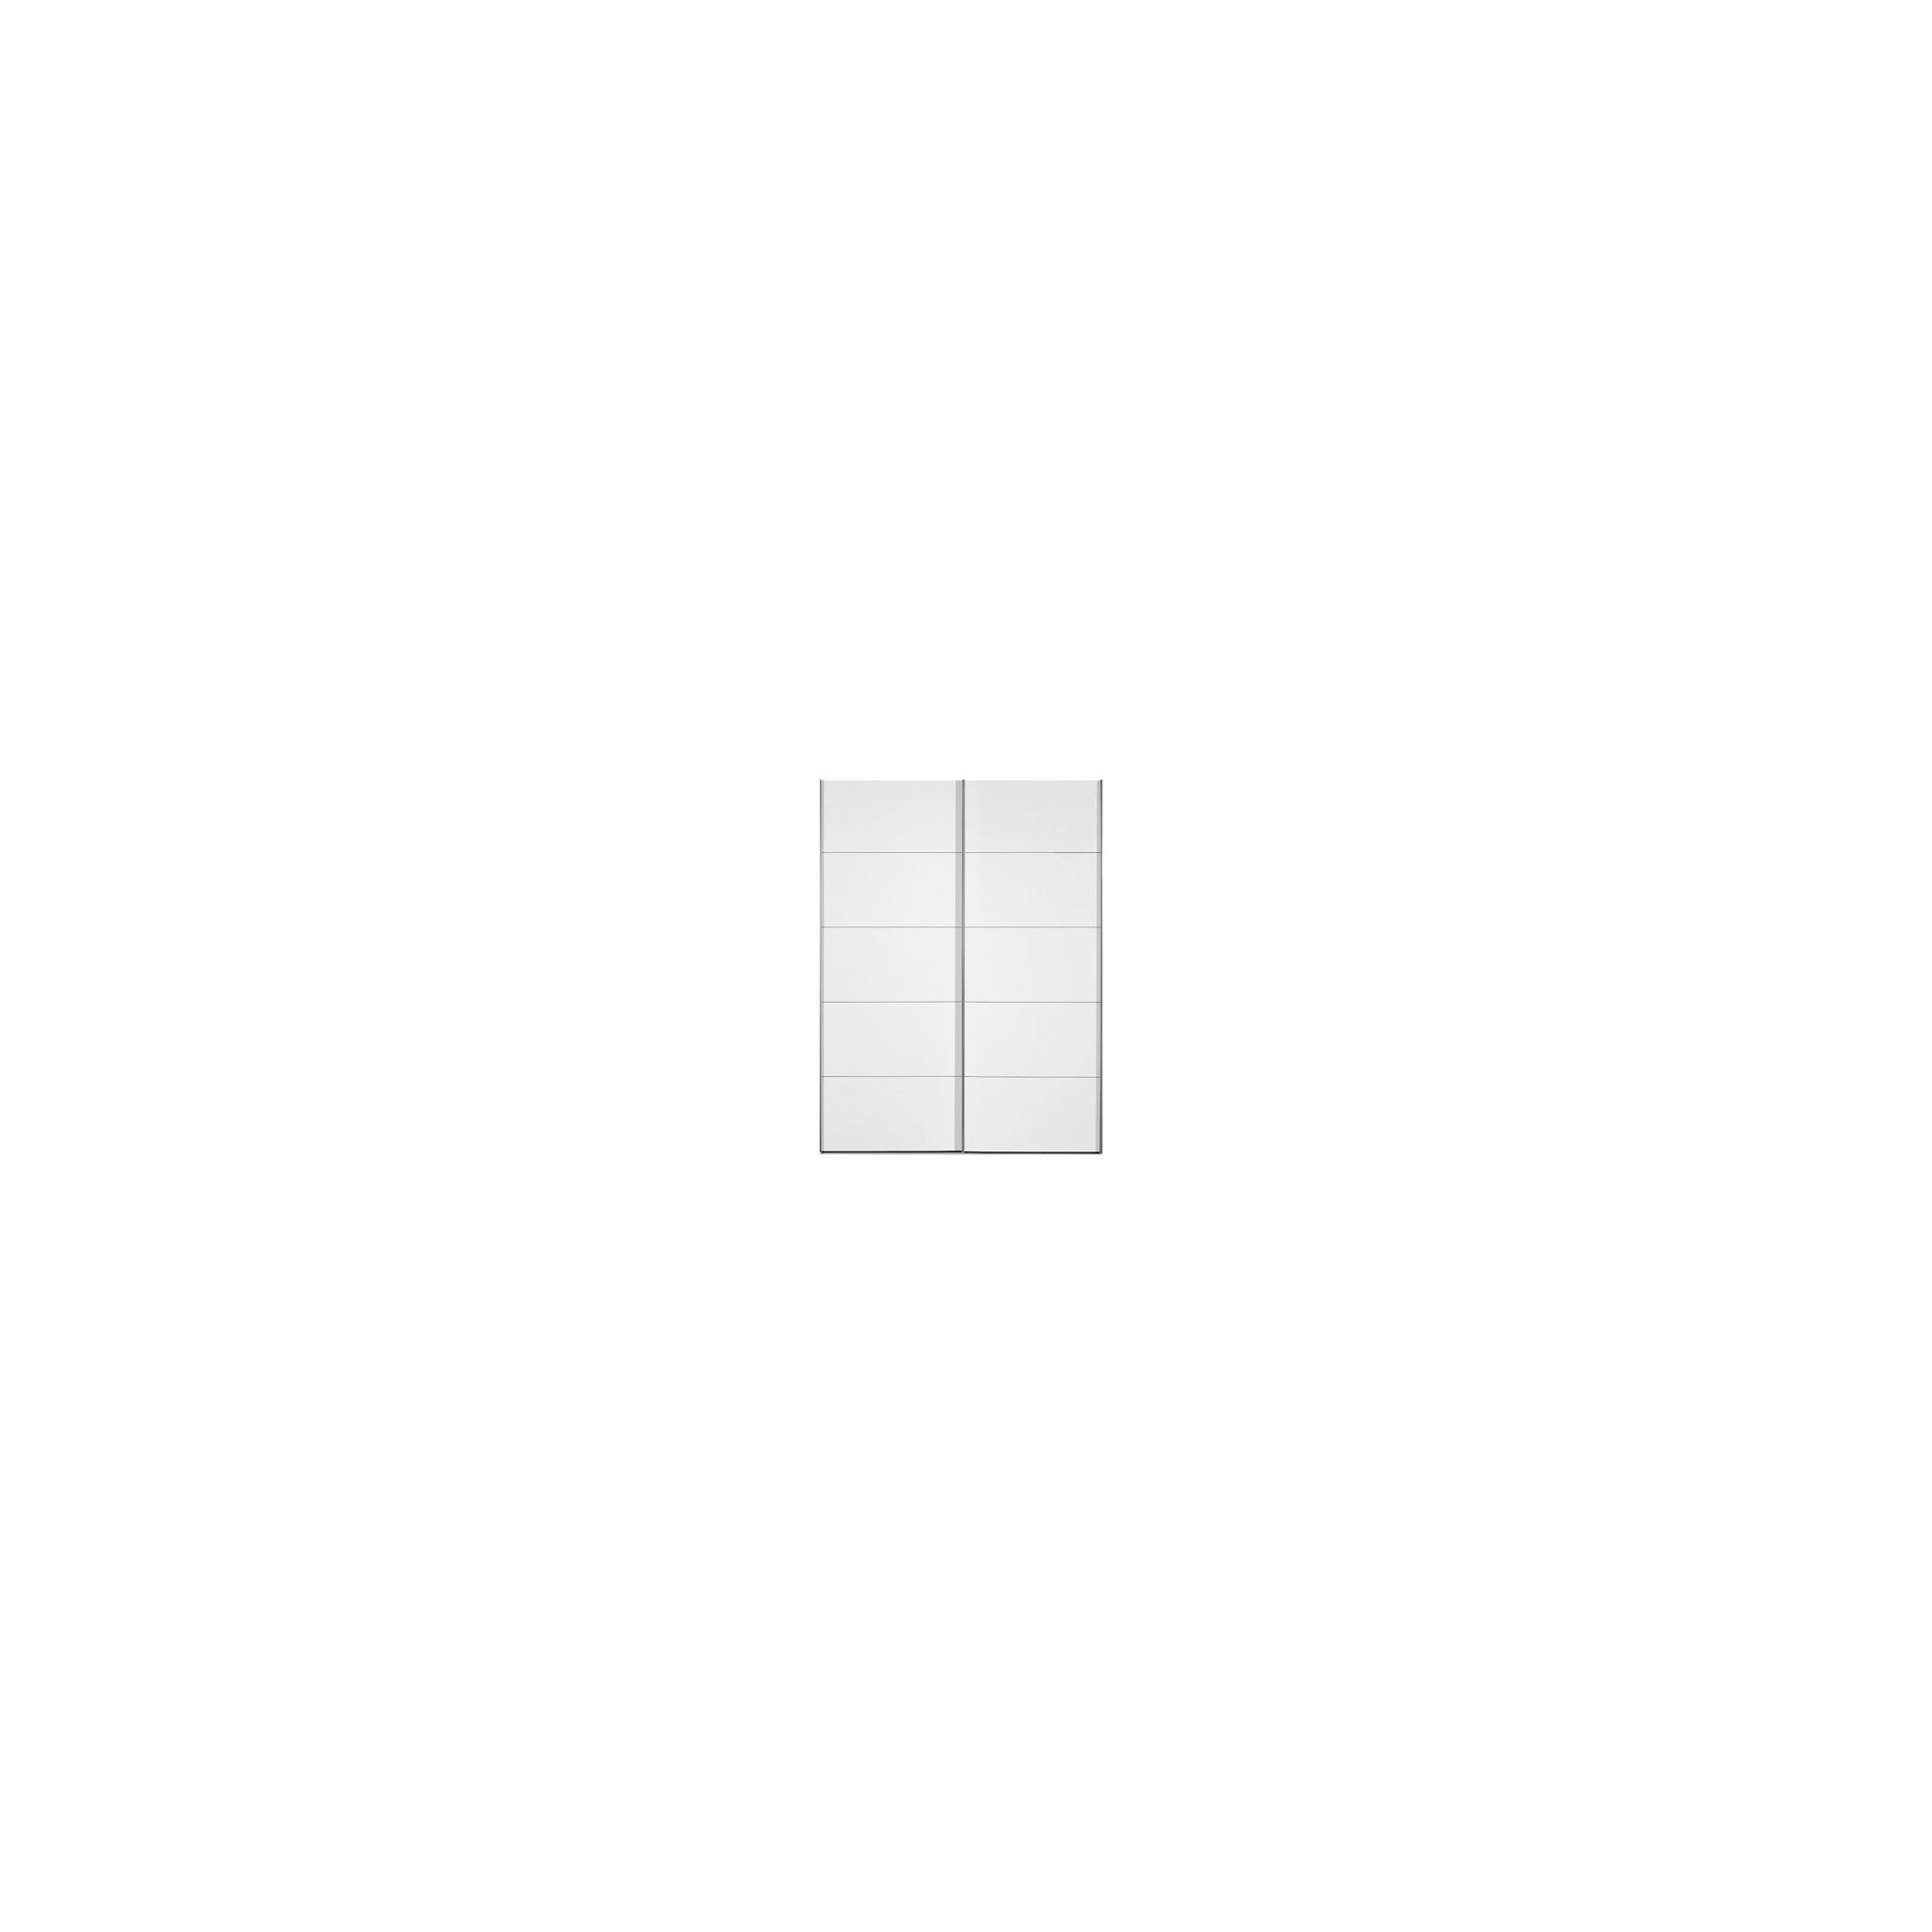 Arte-M Inline Sliding Door Wardrobe - White at Tesco Direct